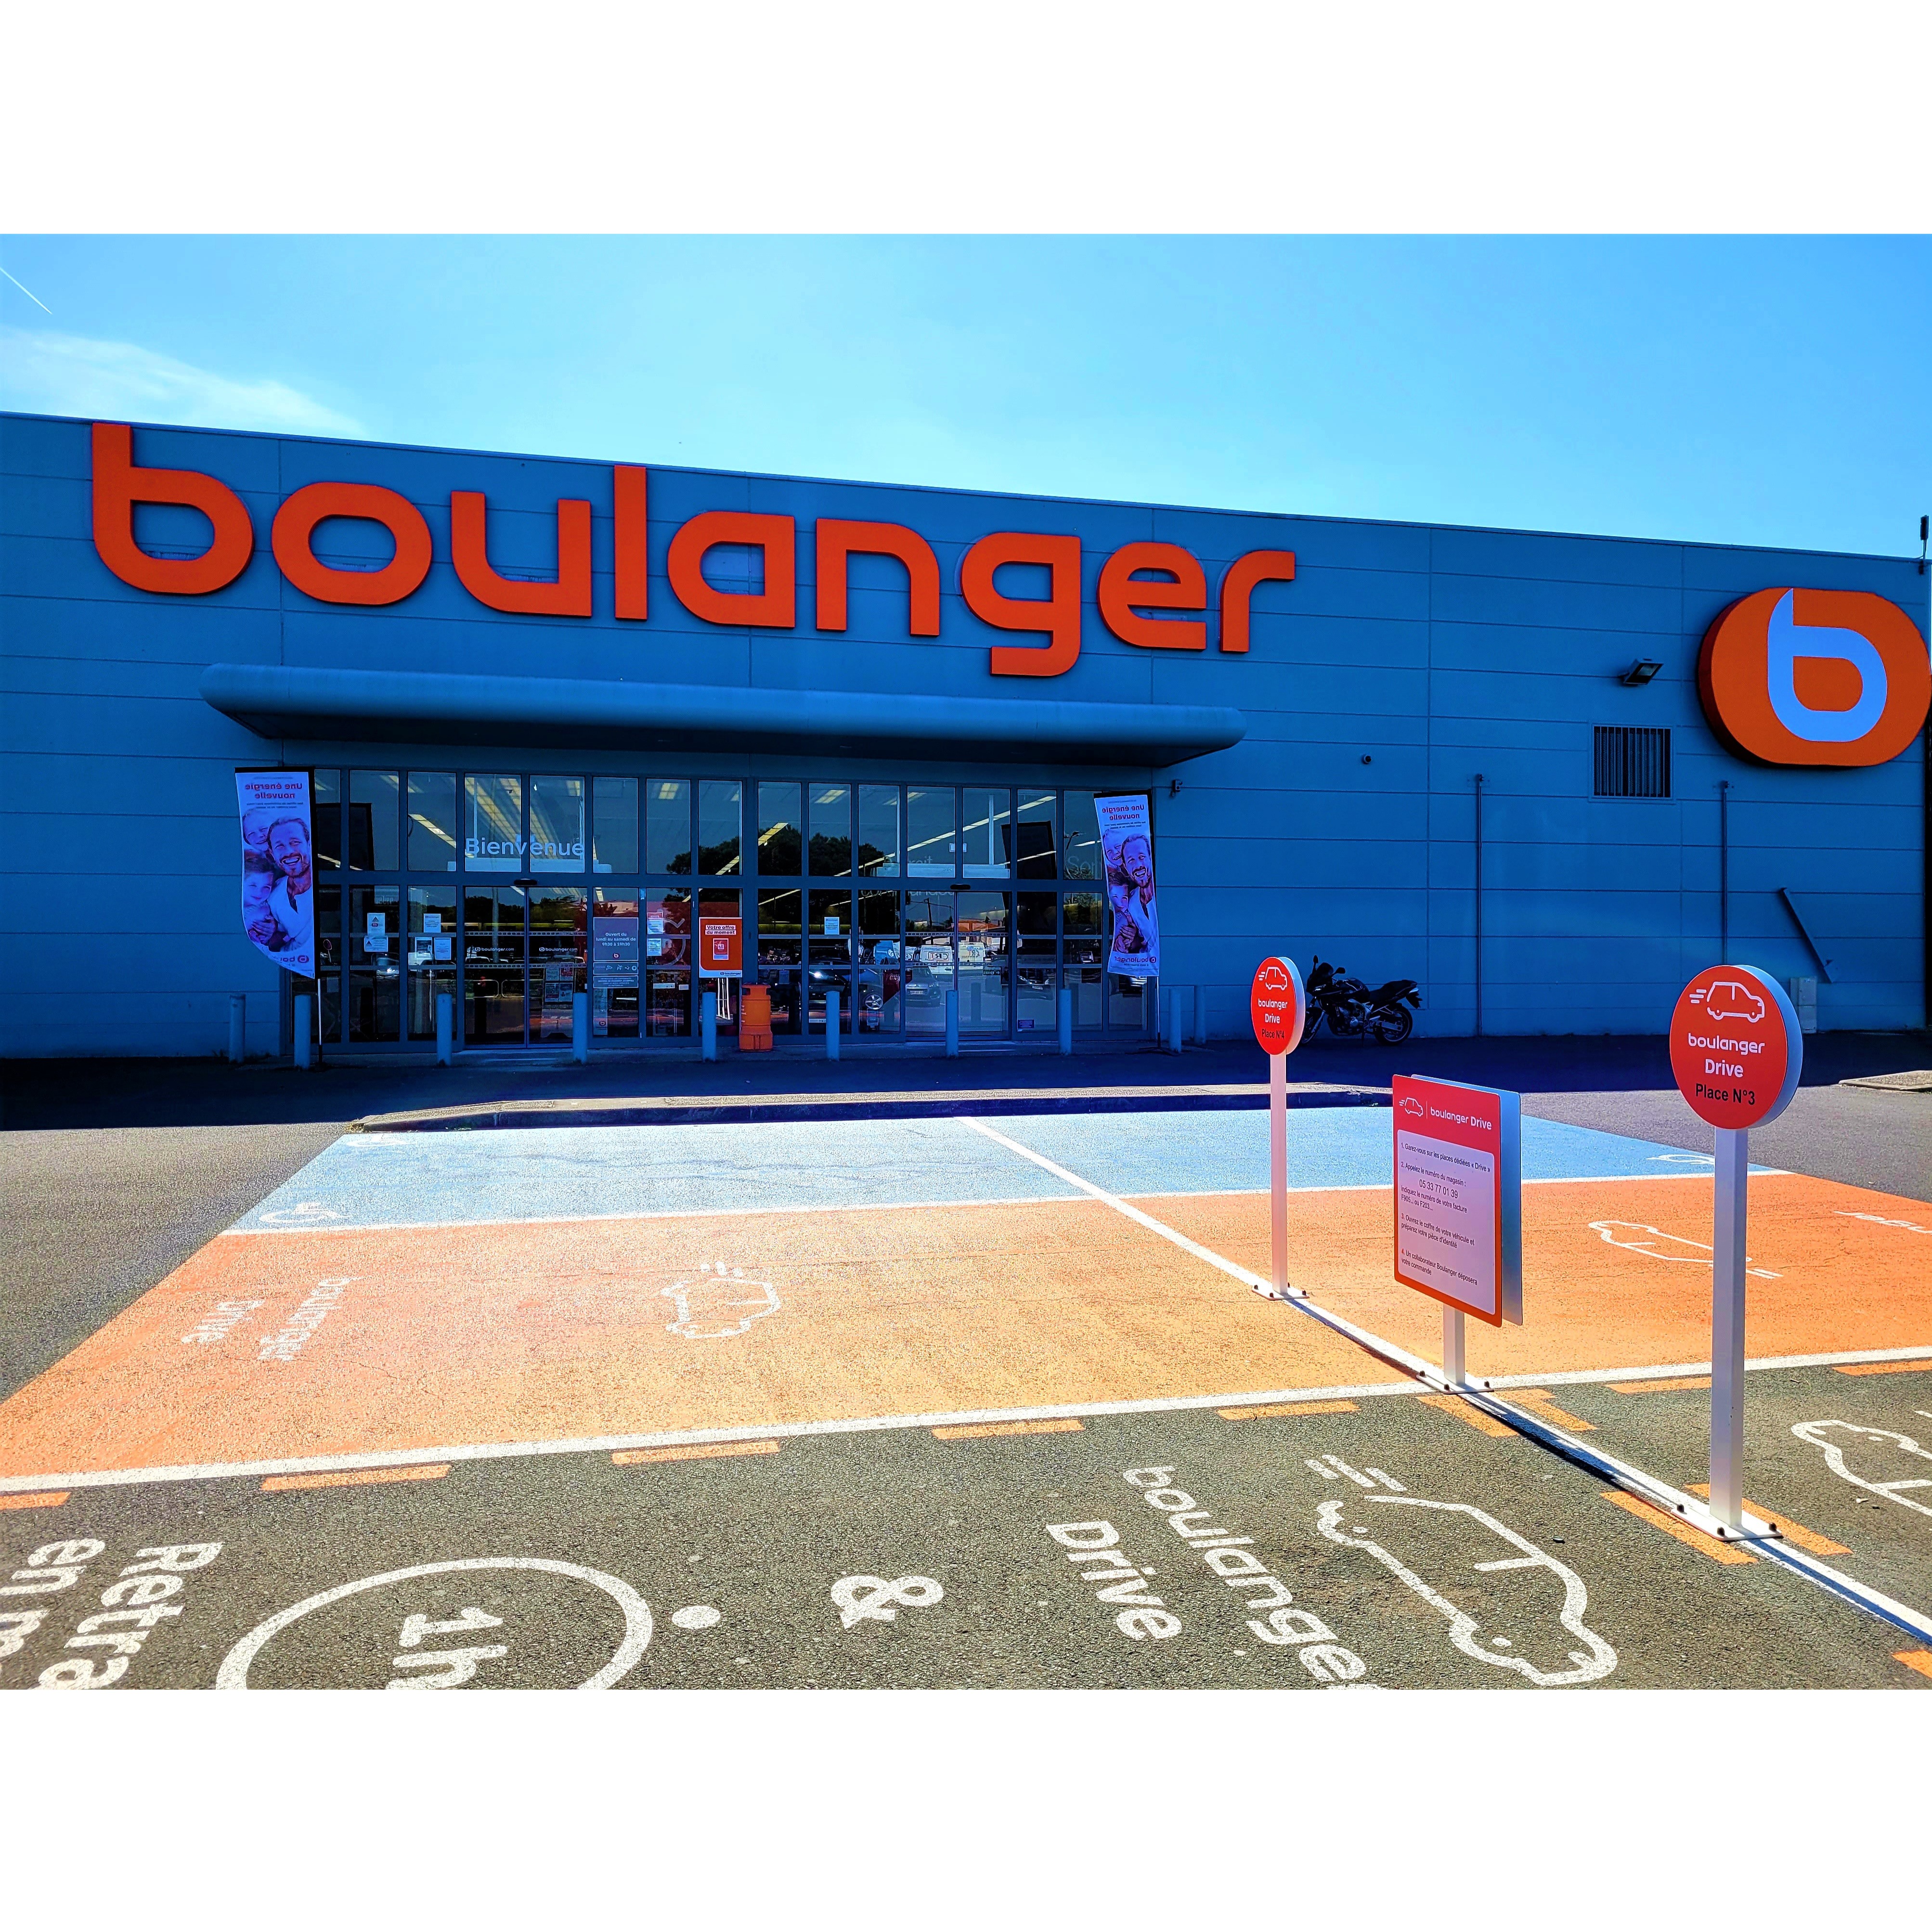 Boulanger Bordeaux - Libourne Logo